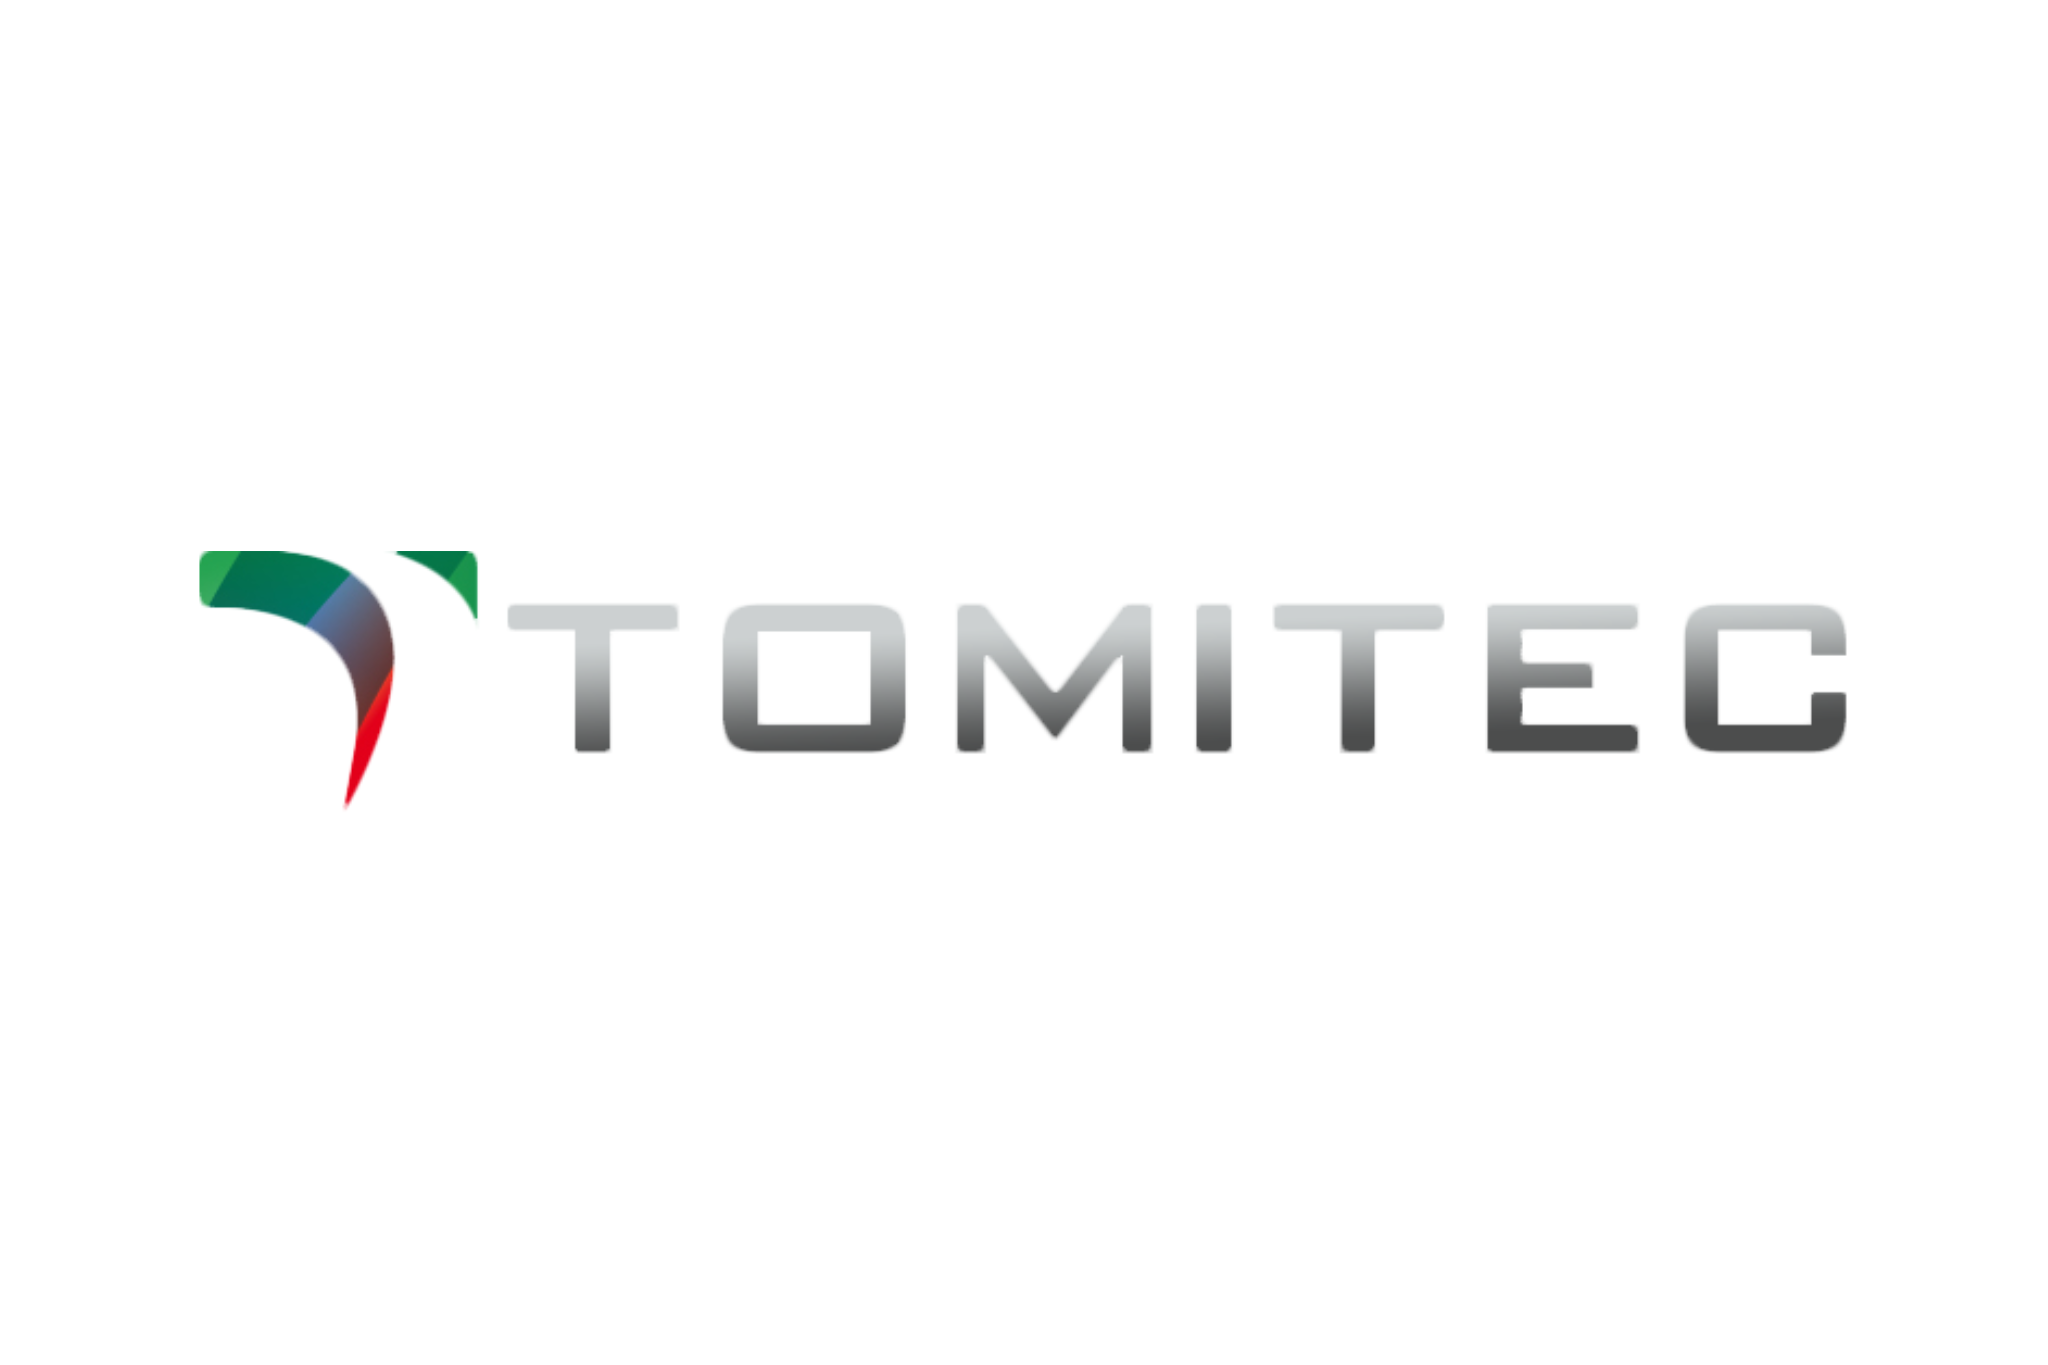 Tomitecin logo